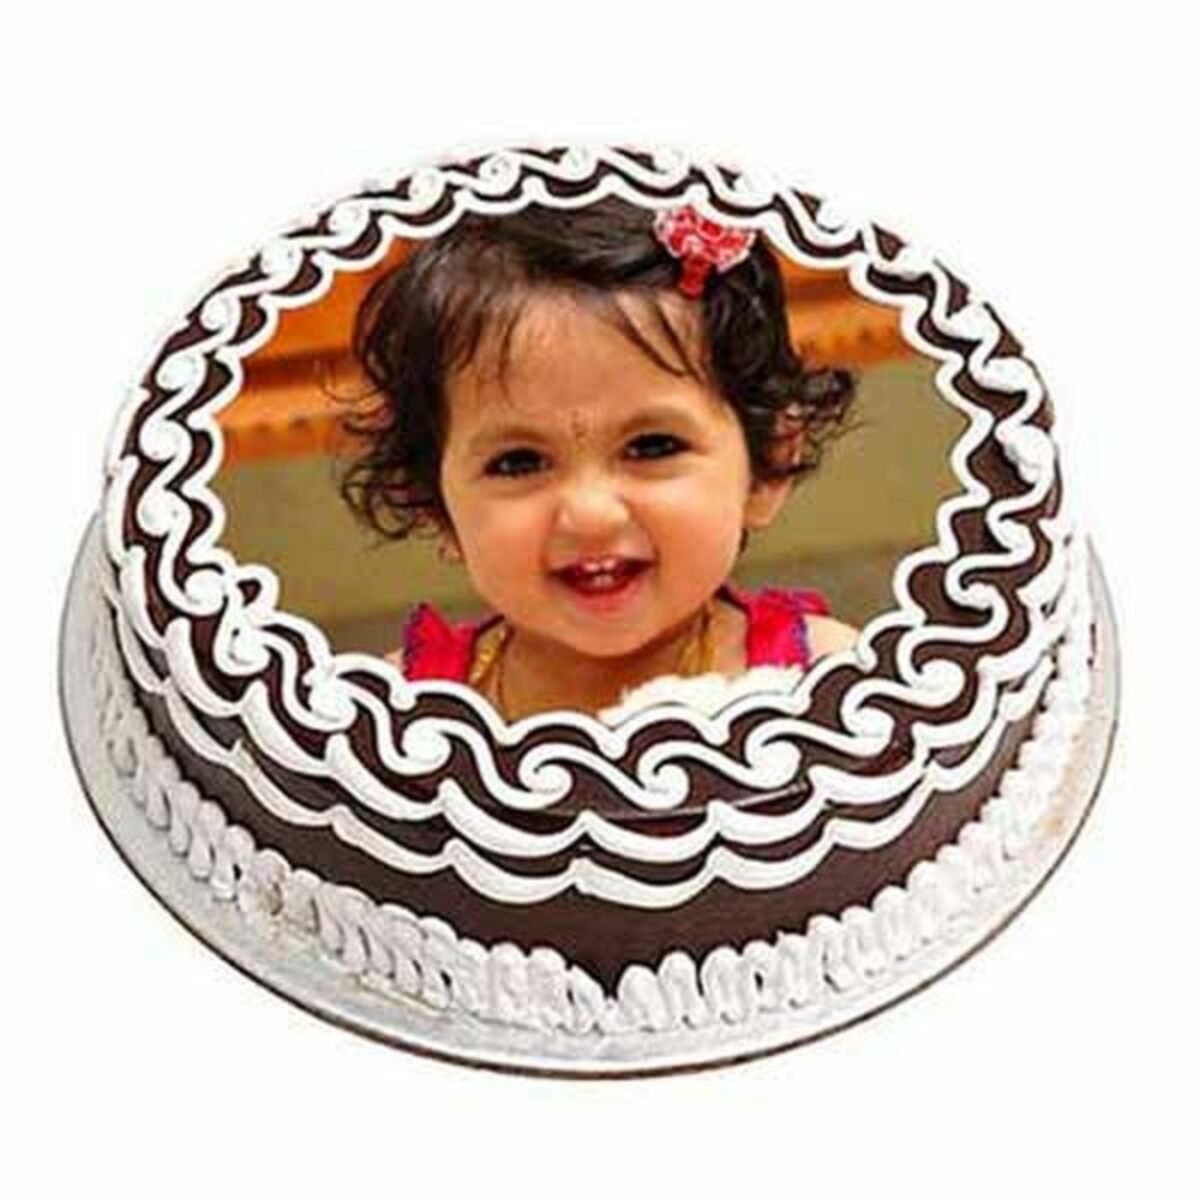 Pineapple Cake Delivery Chennai, Order Cake Online Chennai, Cake Home  Delivery, Send Cake as Gift by Dona Cakes World, Online Shopping India